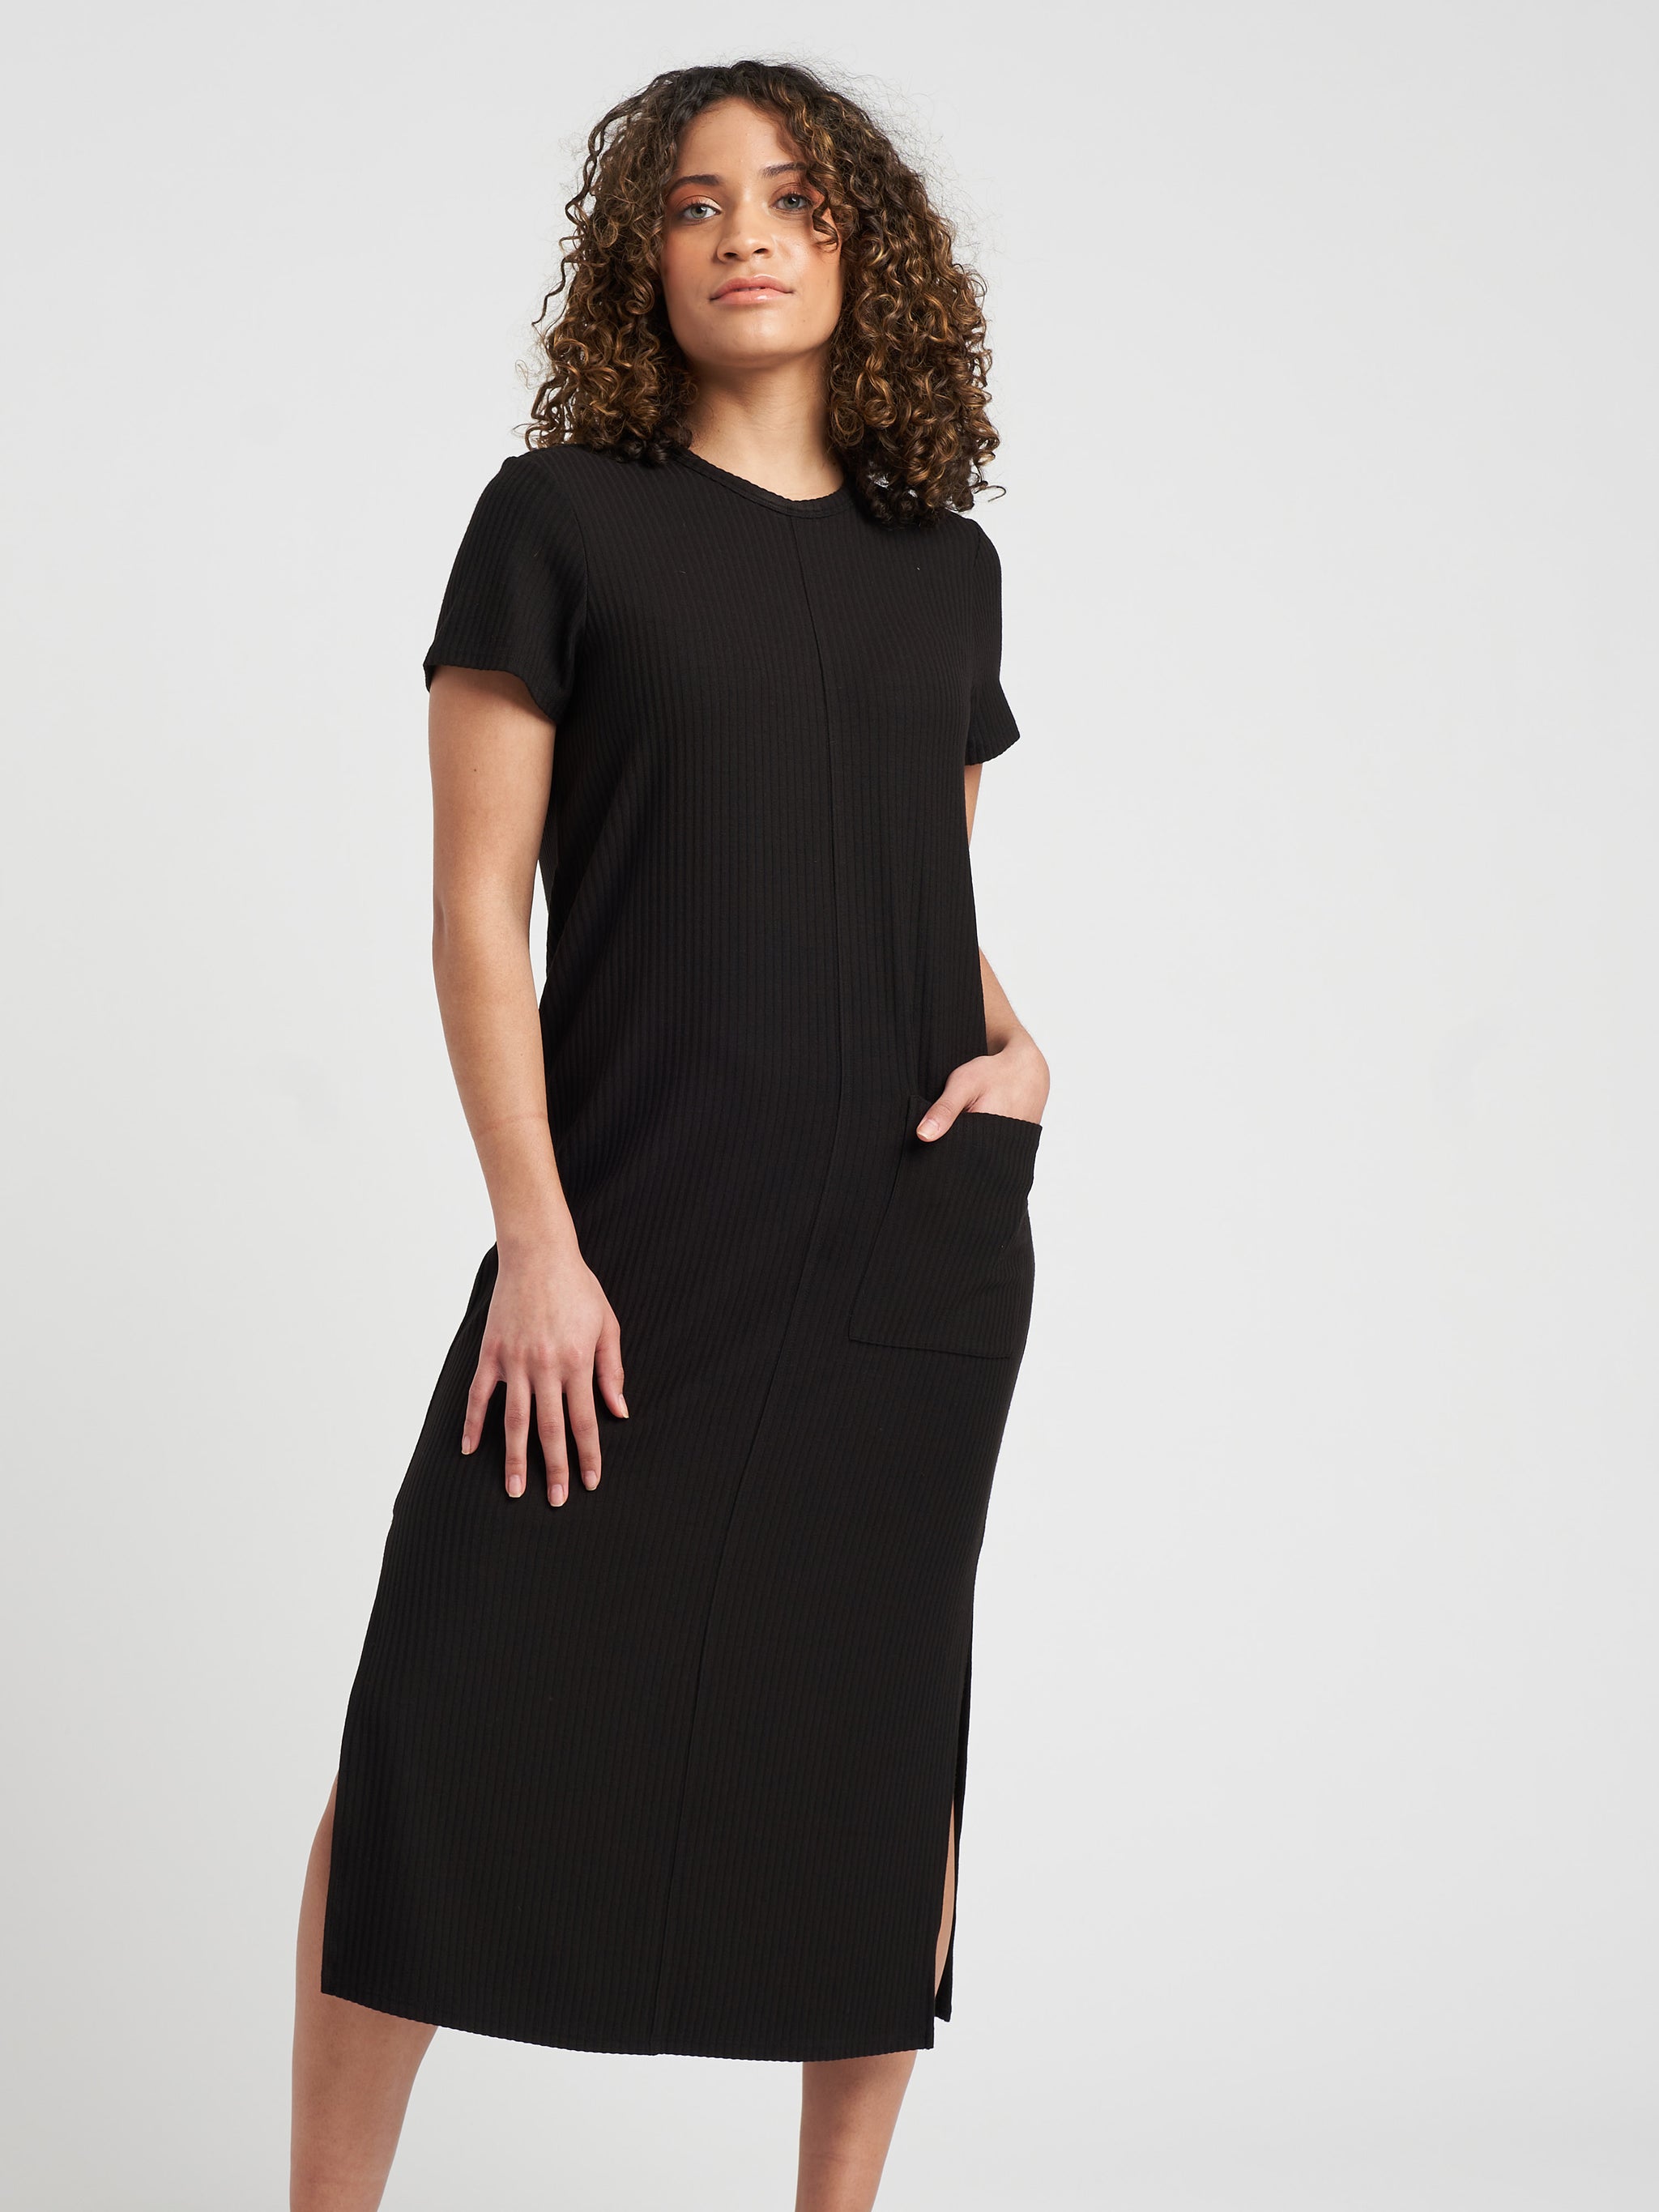 Sammy T–Shirt Dress - Black | Universal Standard